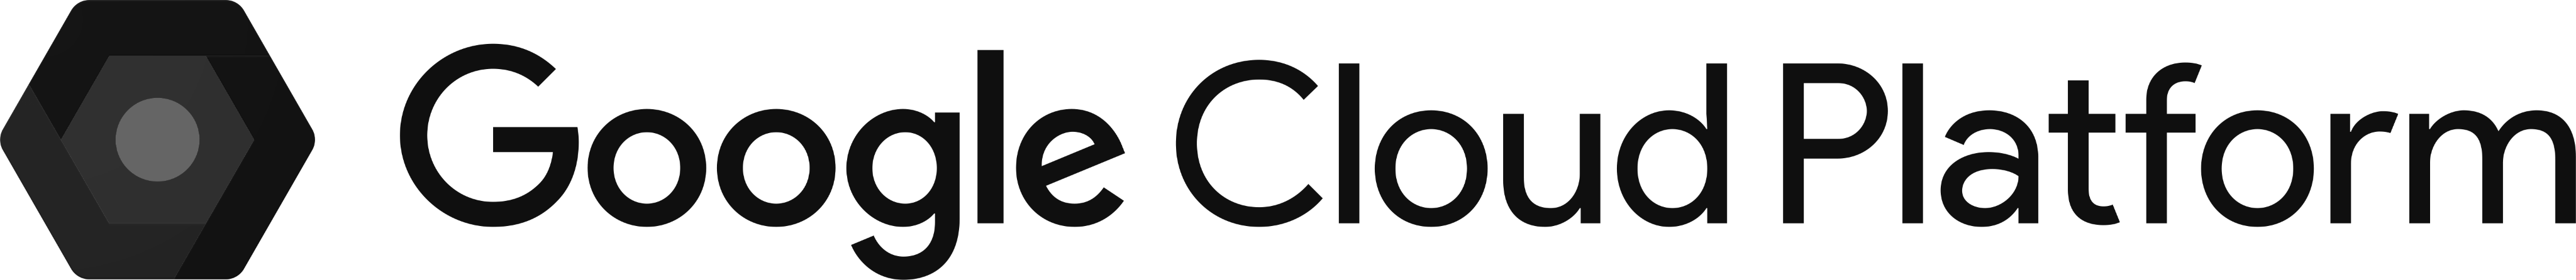 google_cloud_platform-logo_horizontal 1